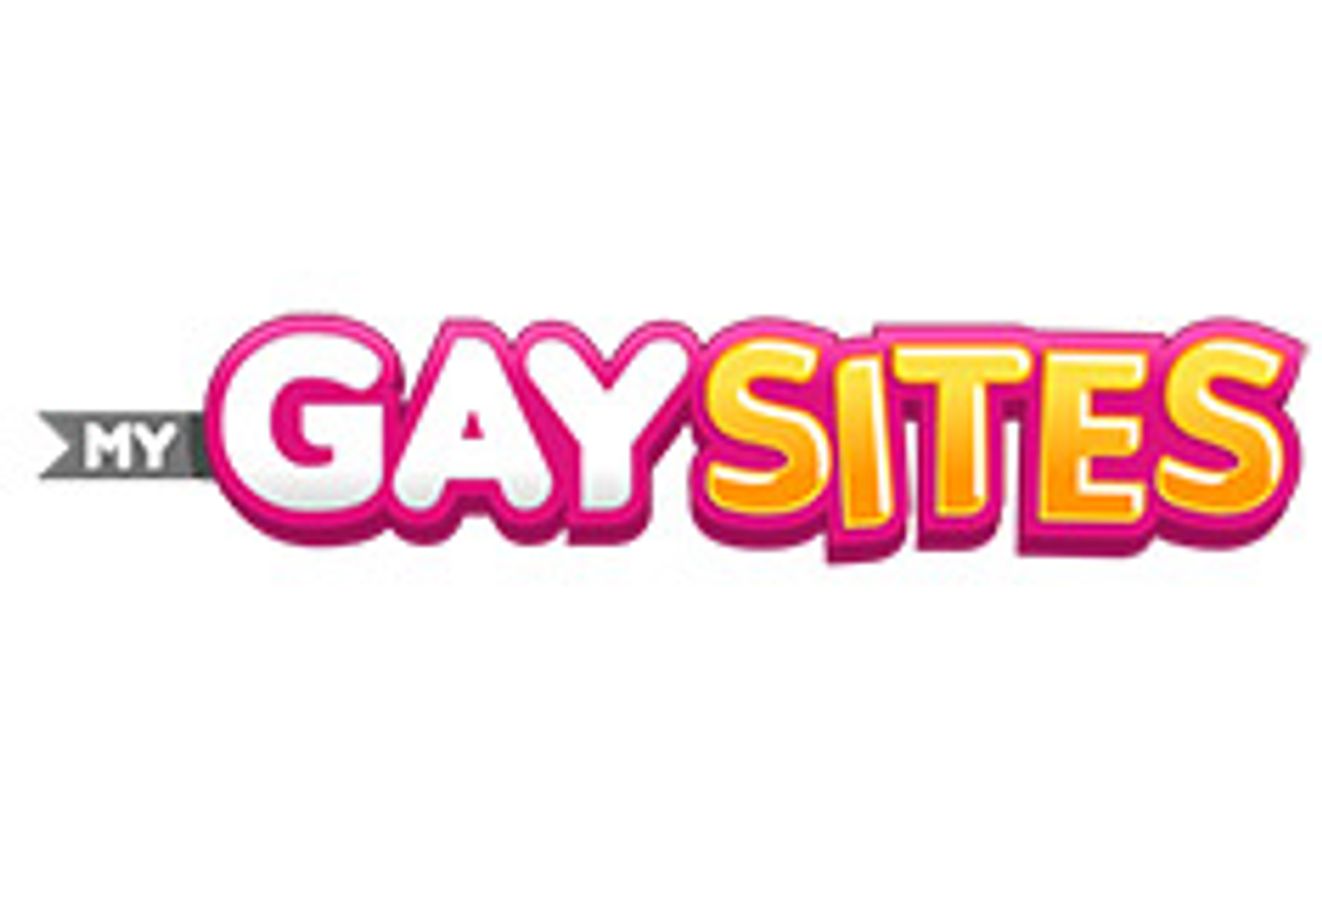 Mygaysites.com gay videos